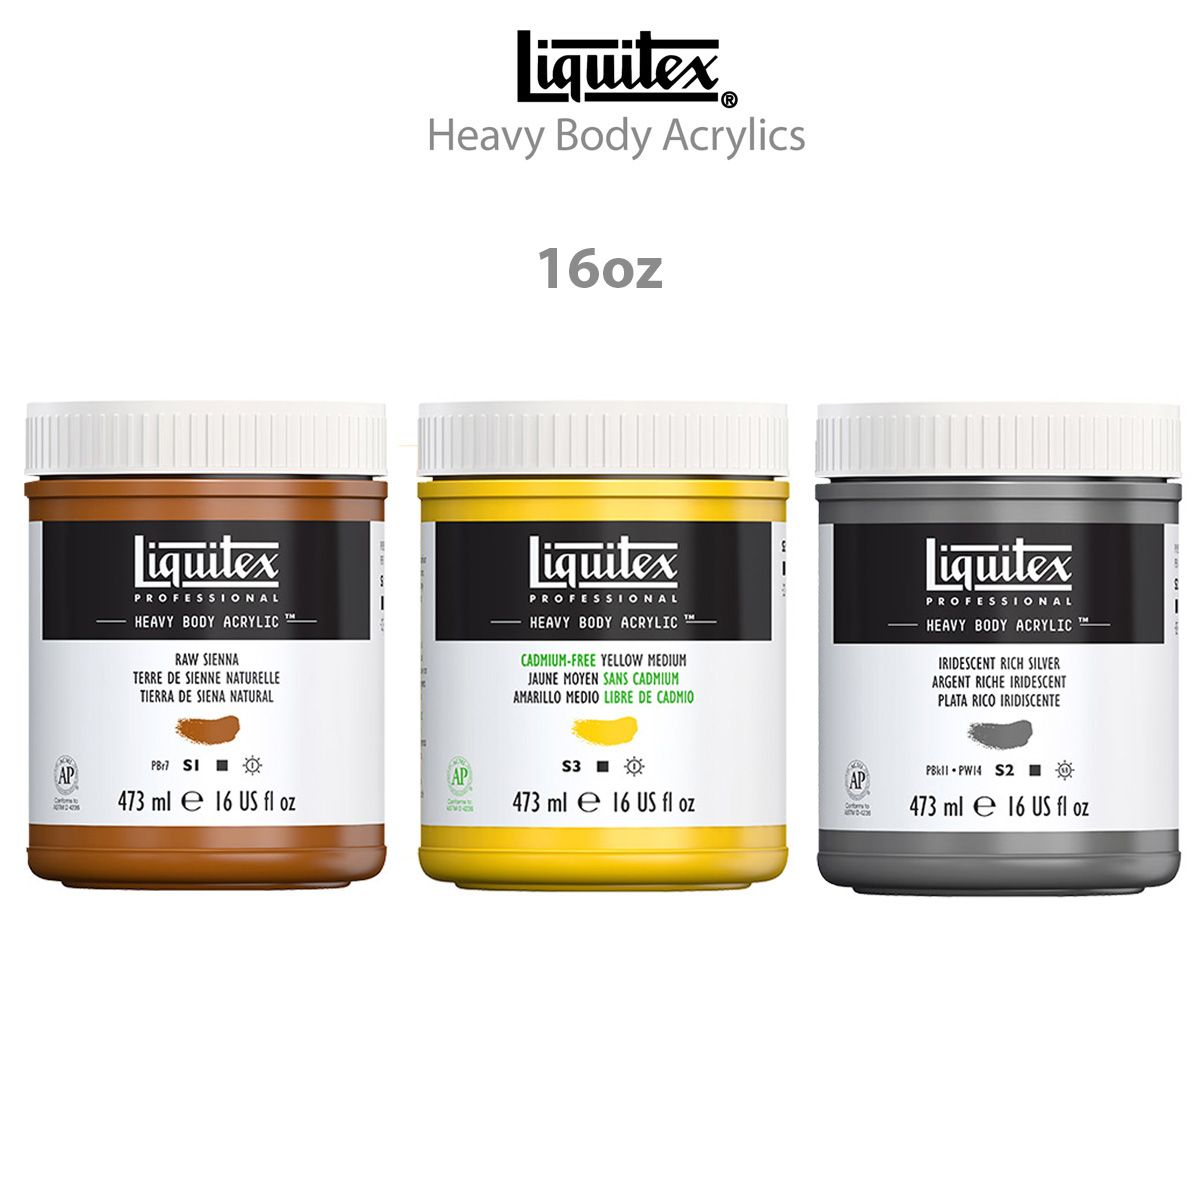 Liquitex Heavy Body Acrylic 16oz Jar